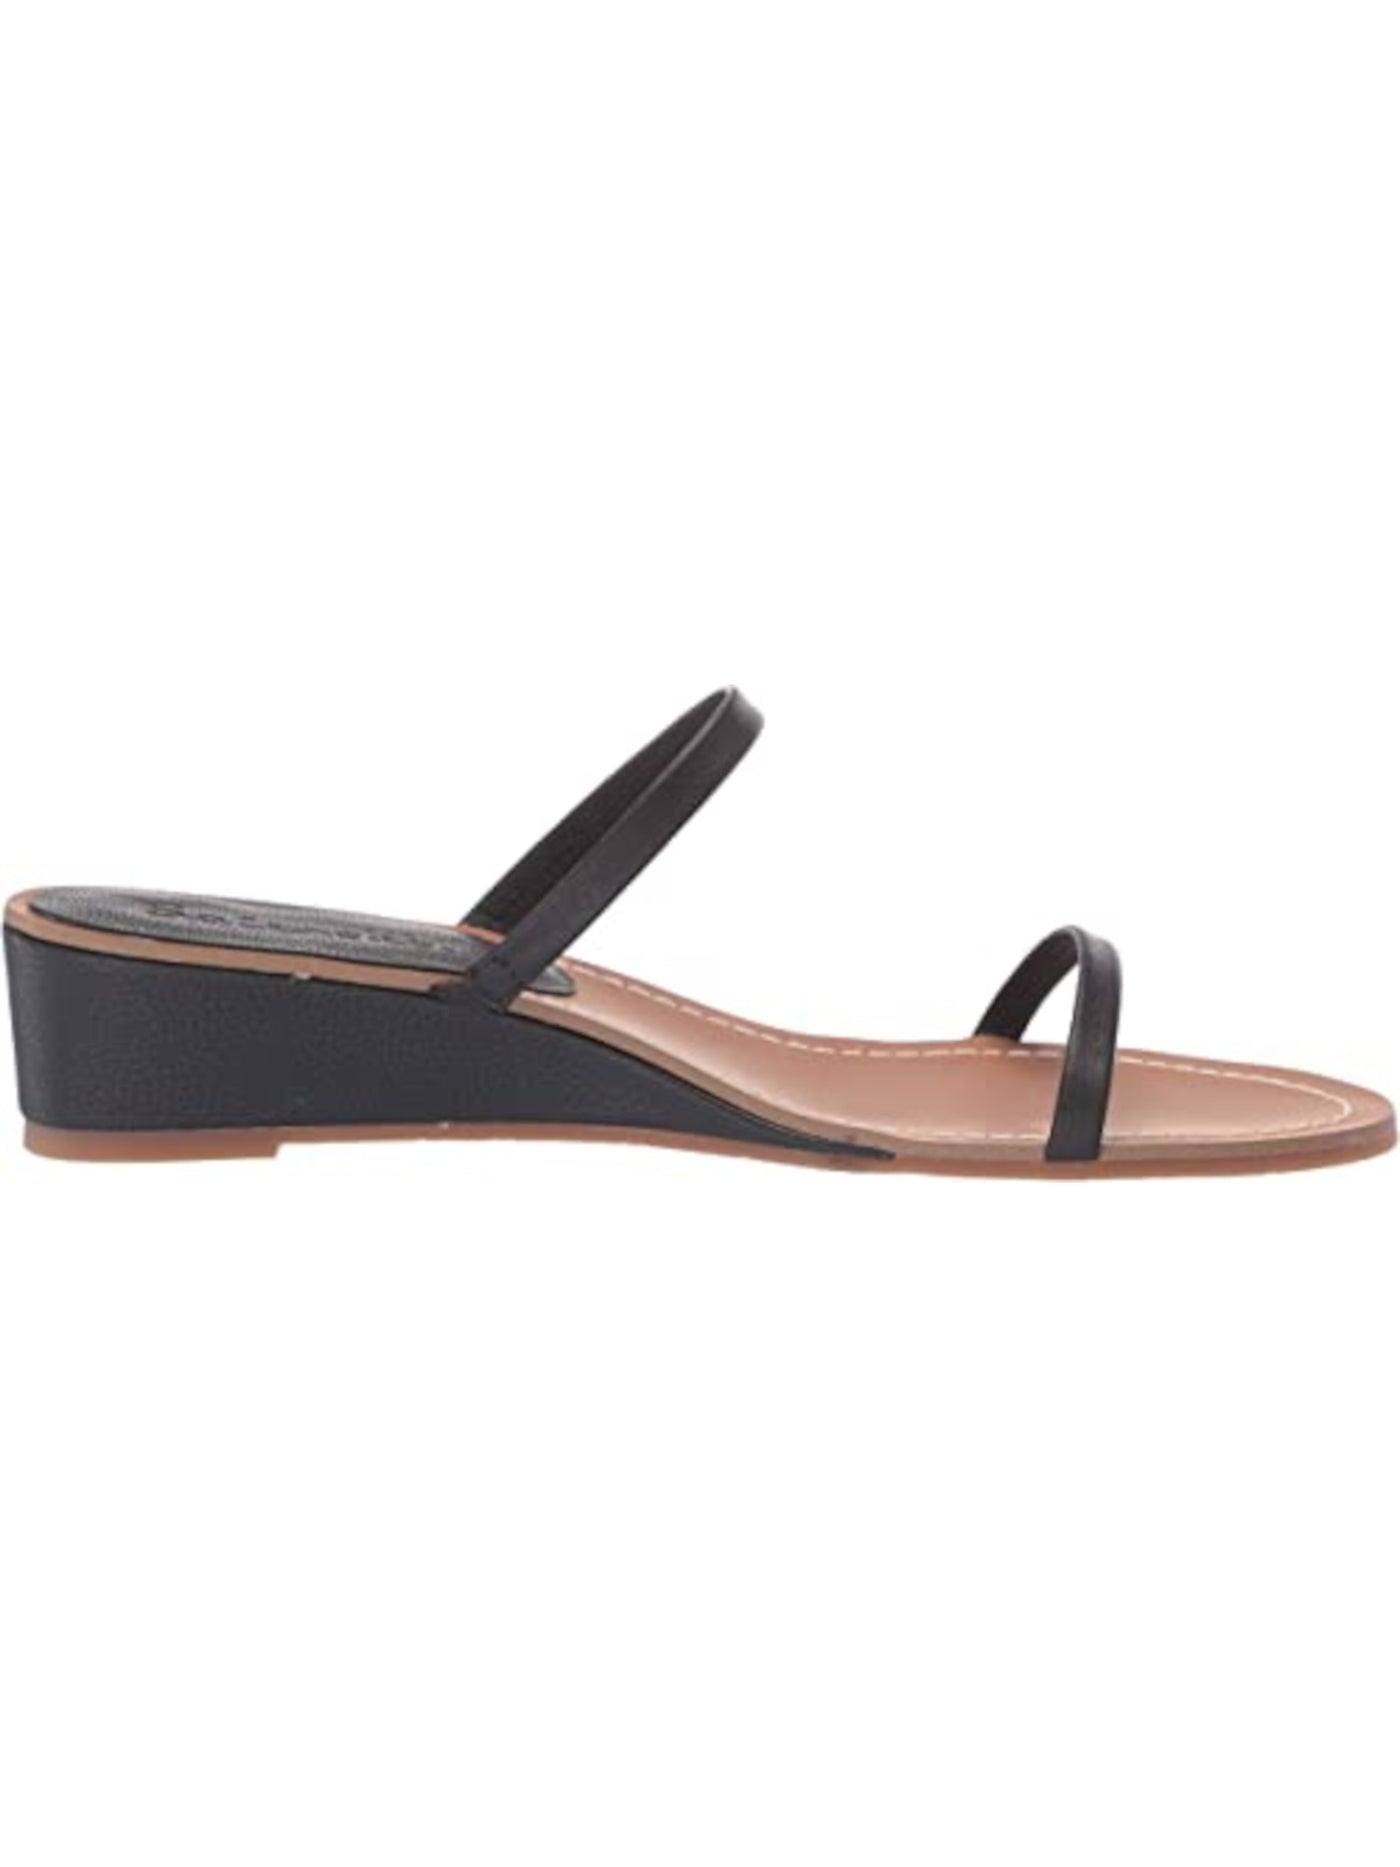 SPLENDID Womens Black Comfort Strappy Melanie Round Toe Wedge Slip On Leather Slide Sandals Shoes 8.5 M